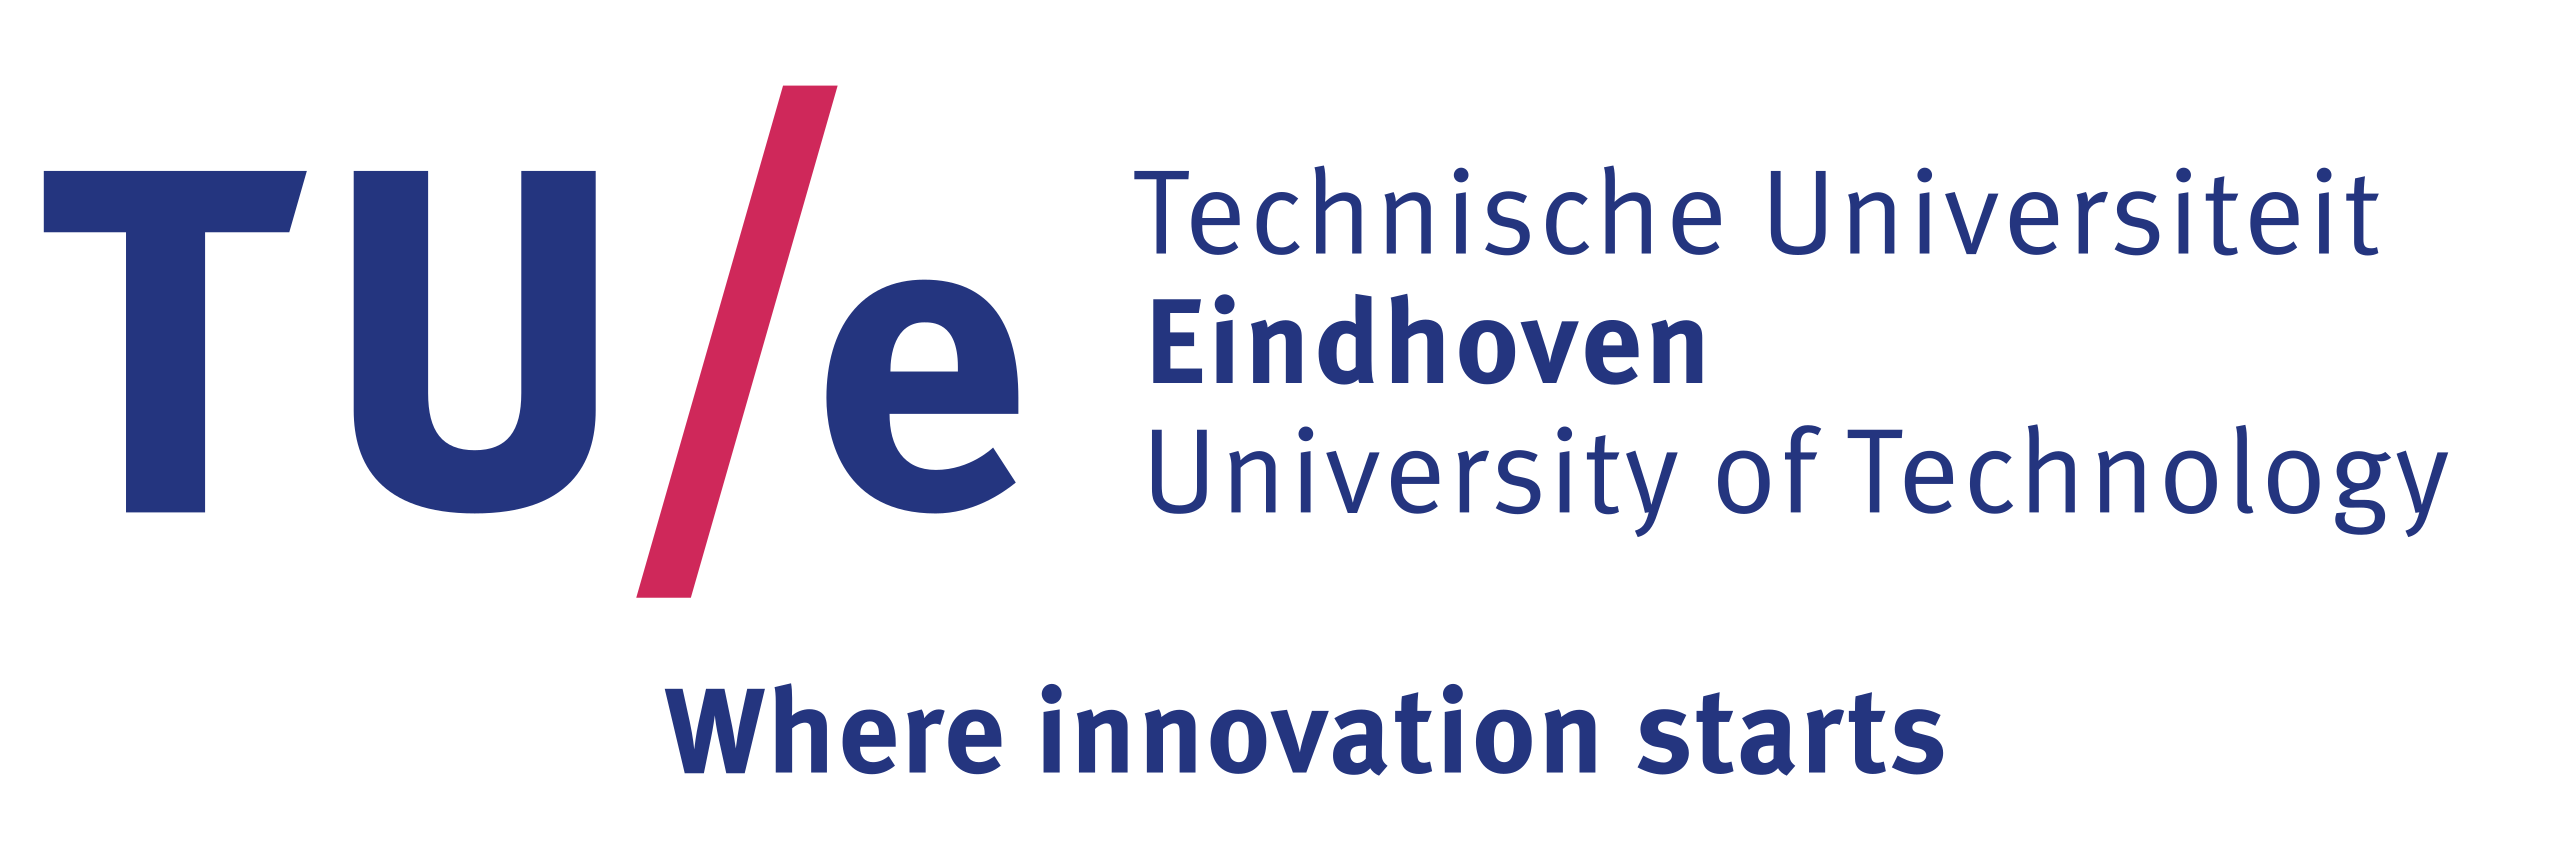 Technische universiteit logo